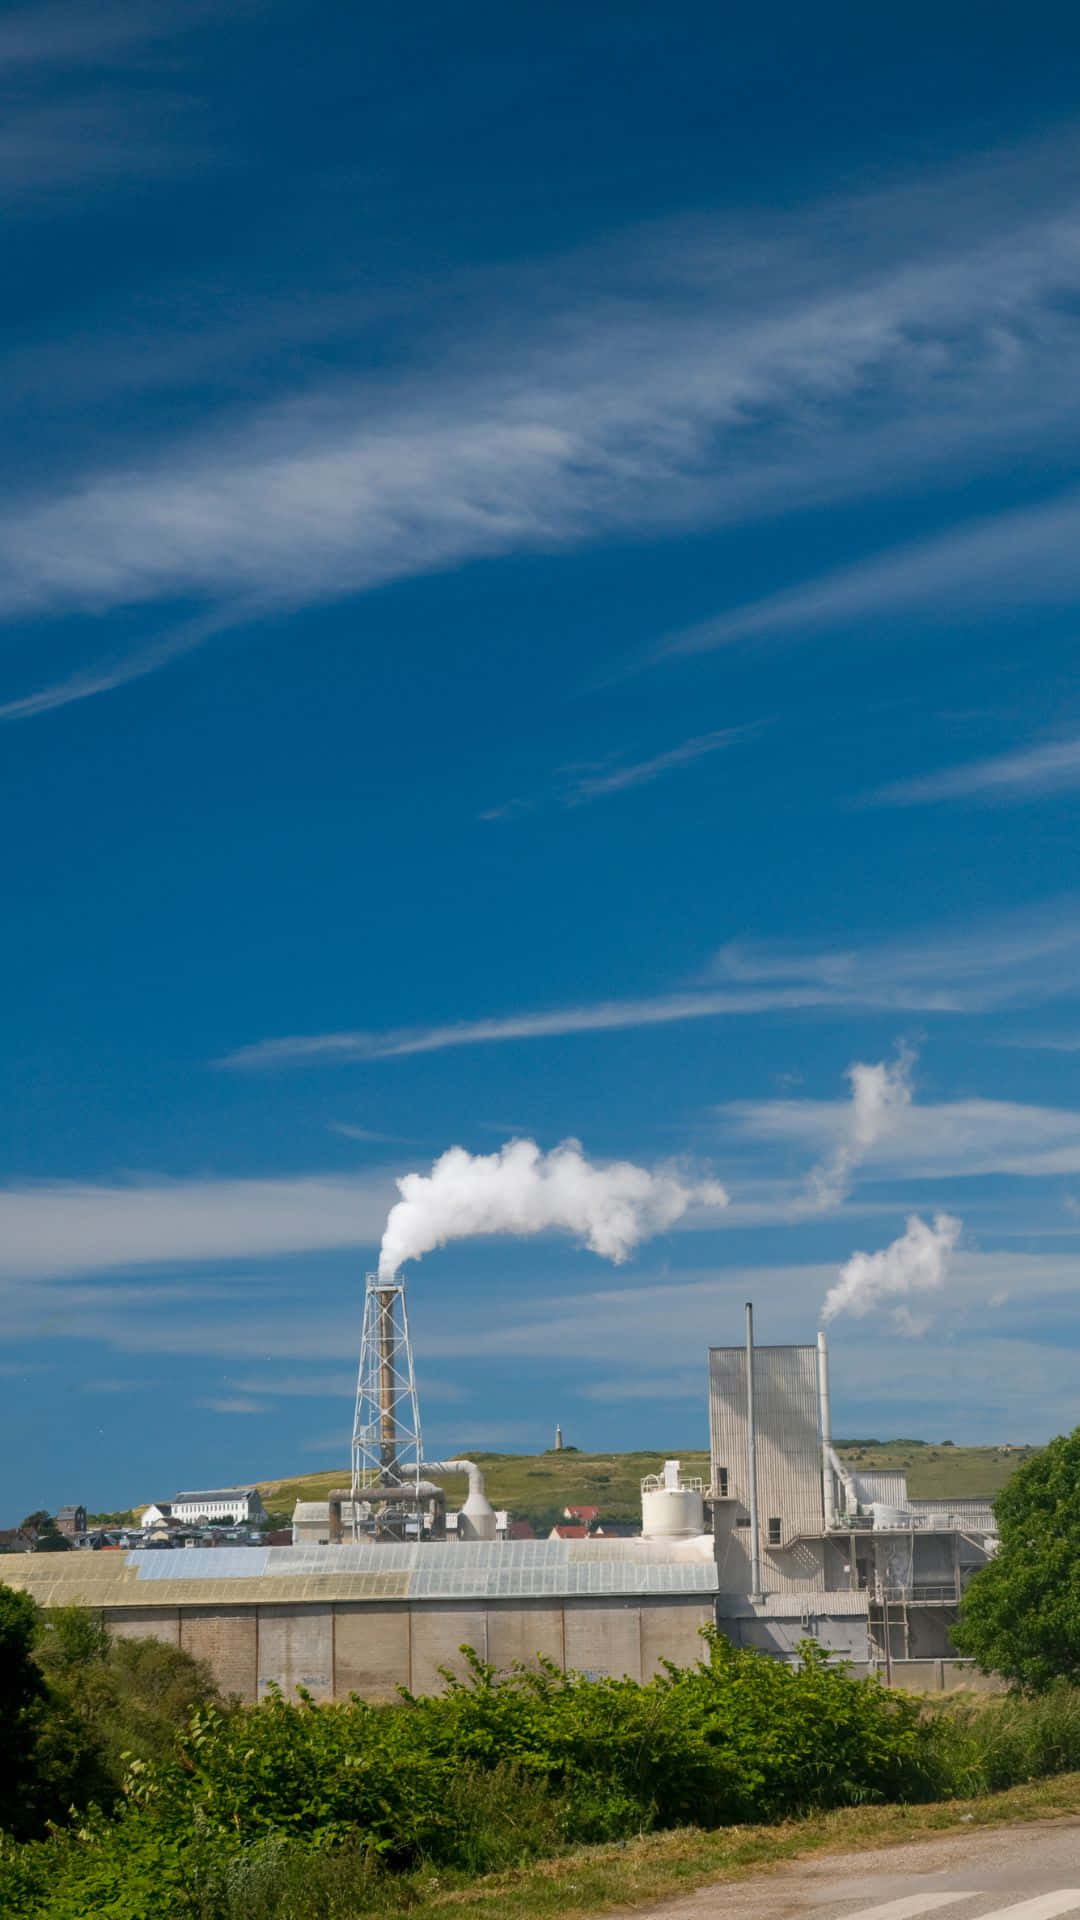 Industrial Facility Emitting Smoke Under Blue Sky Wallpaper